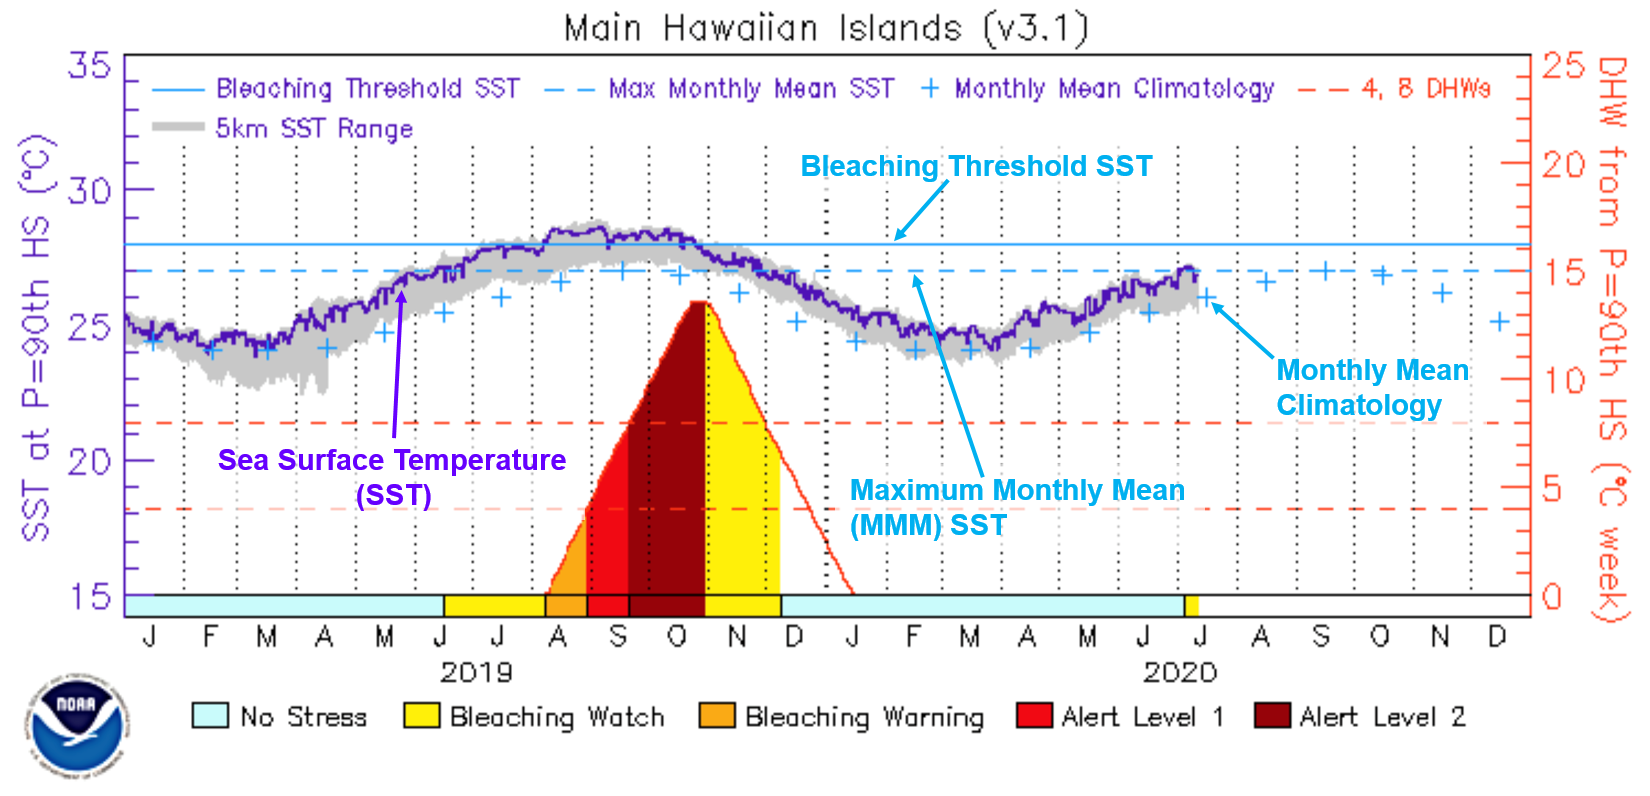 Main Hawaiian Islands time series graph with Bleaching Threshold